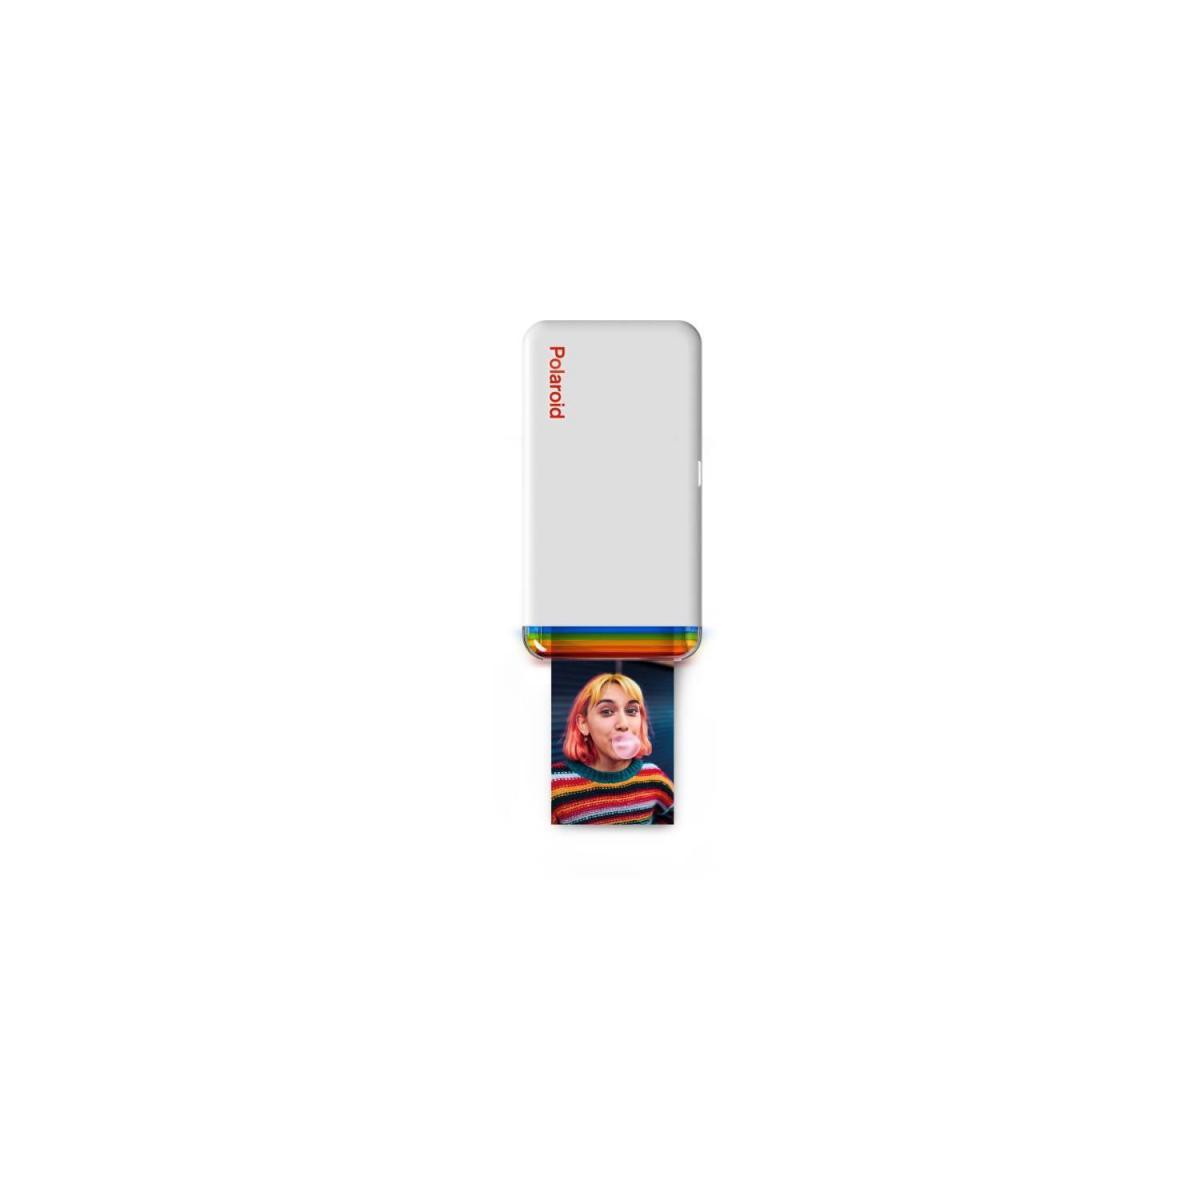 Polaroid Hi.Print 2x3 Imprimante de poche - Blanc